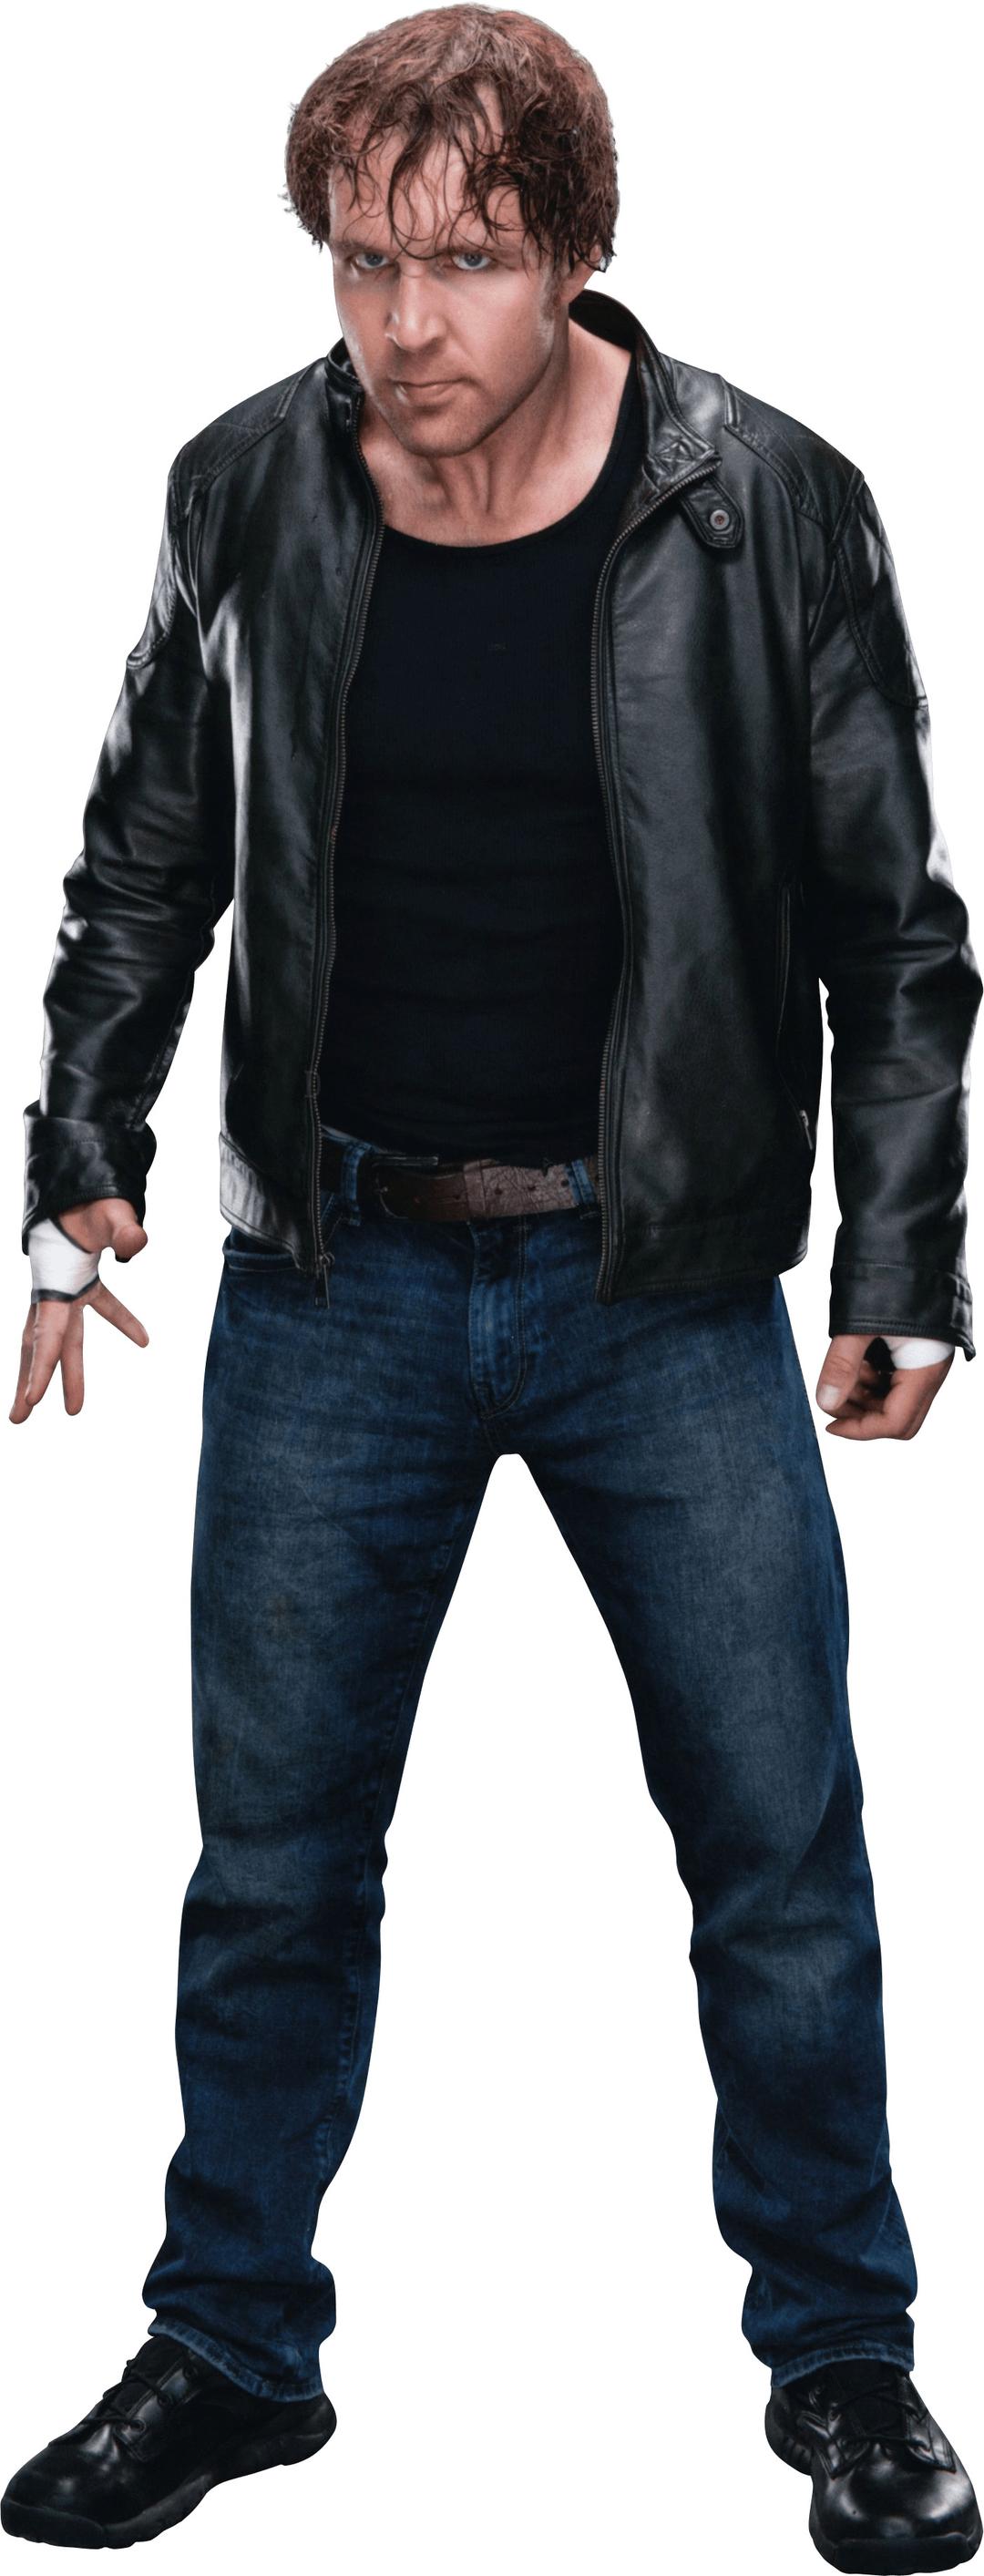 Dean Ambrose Leather Jacket Standing png transparent